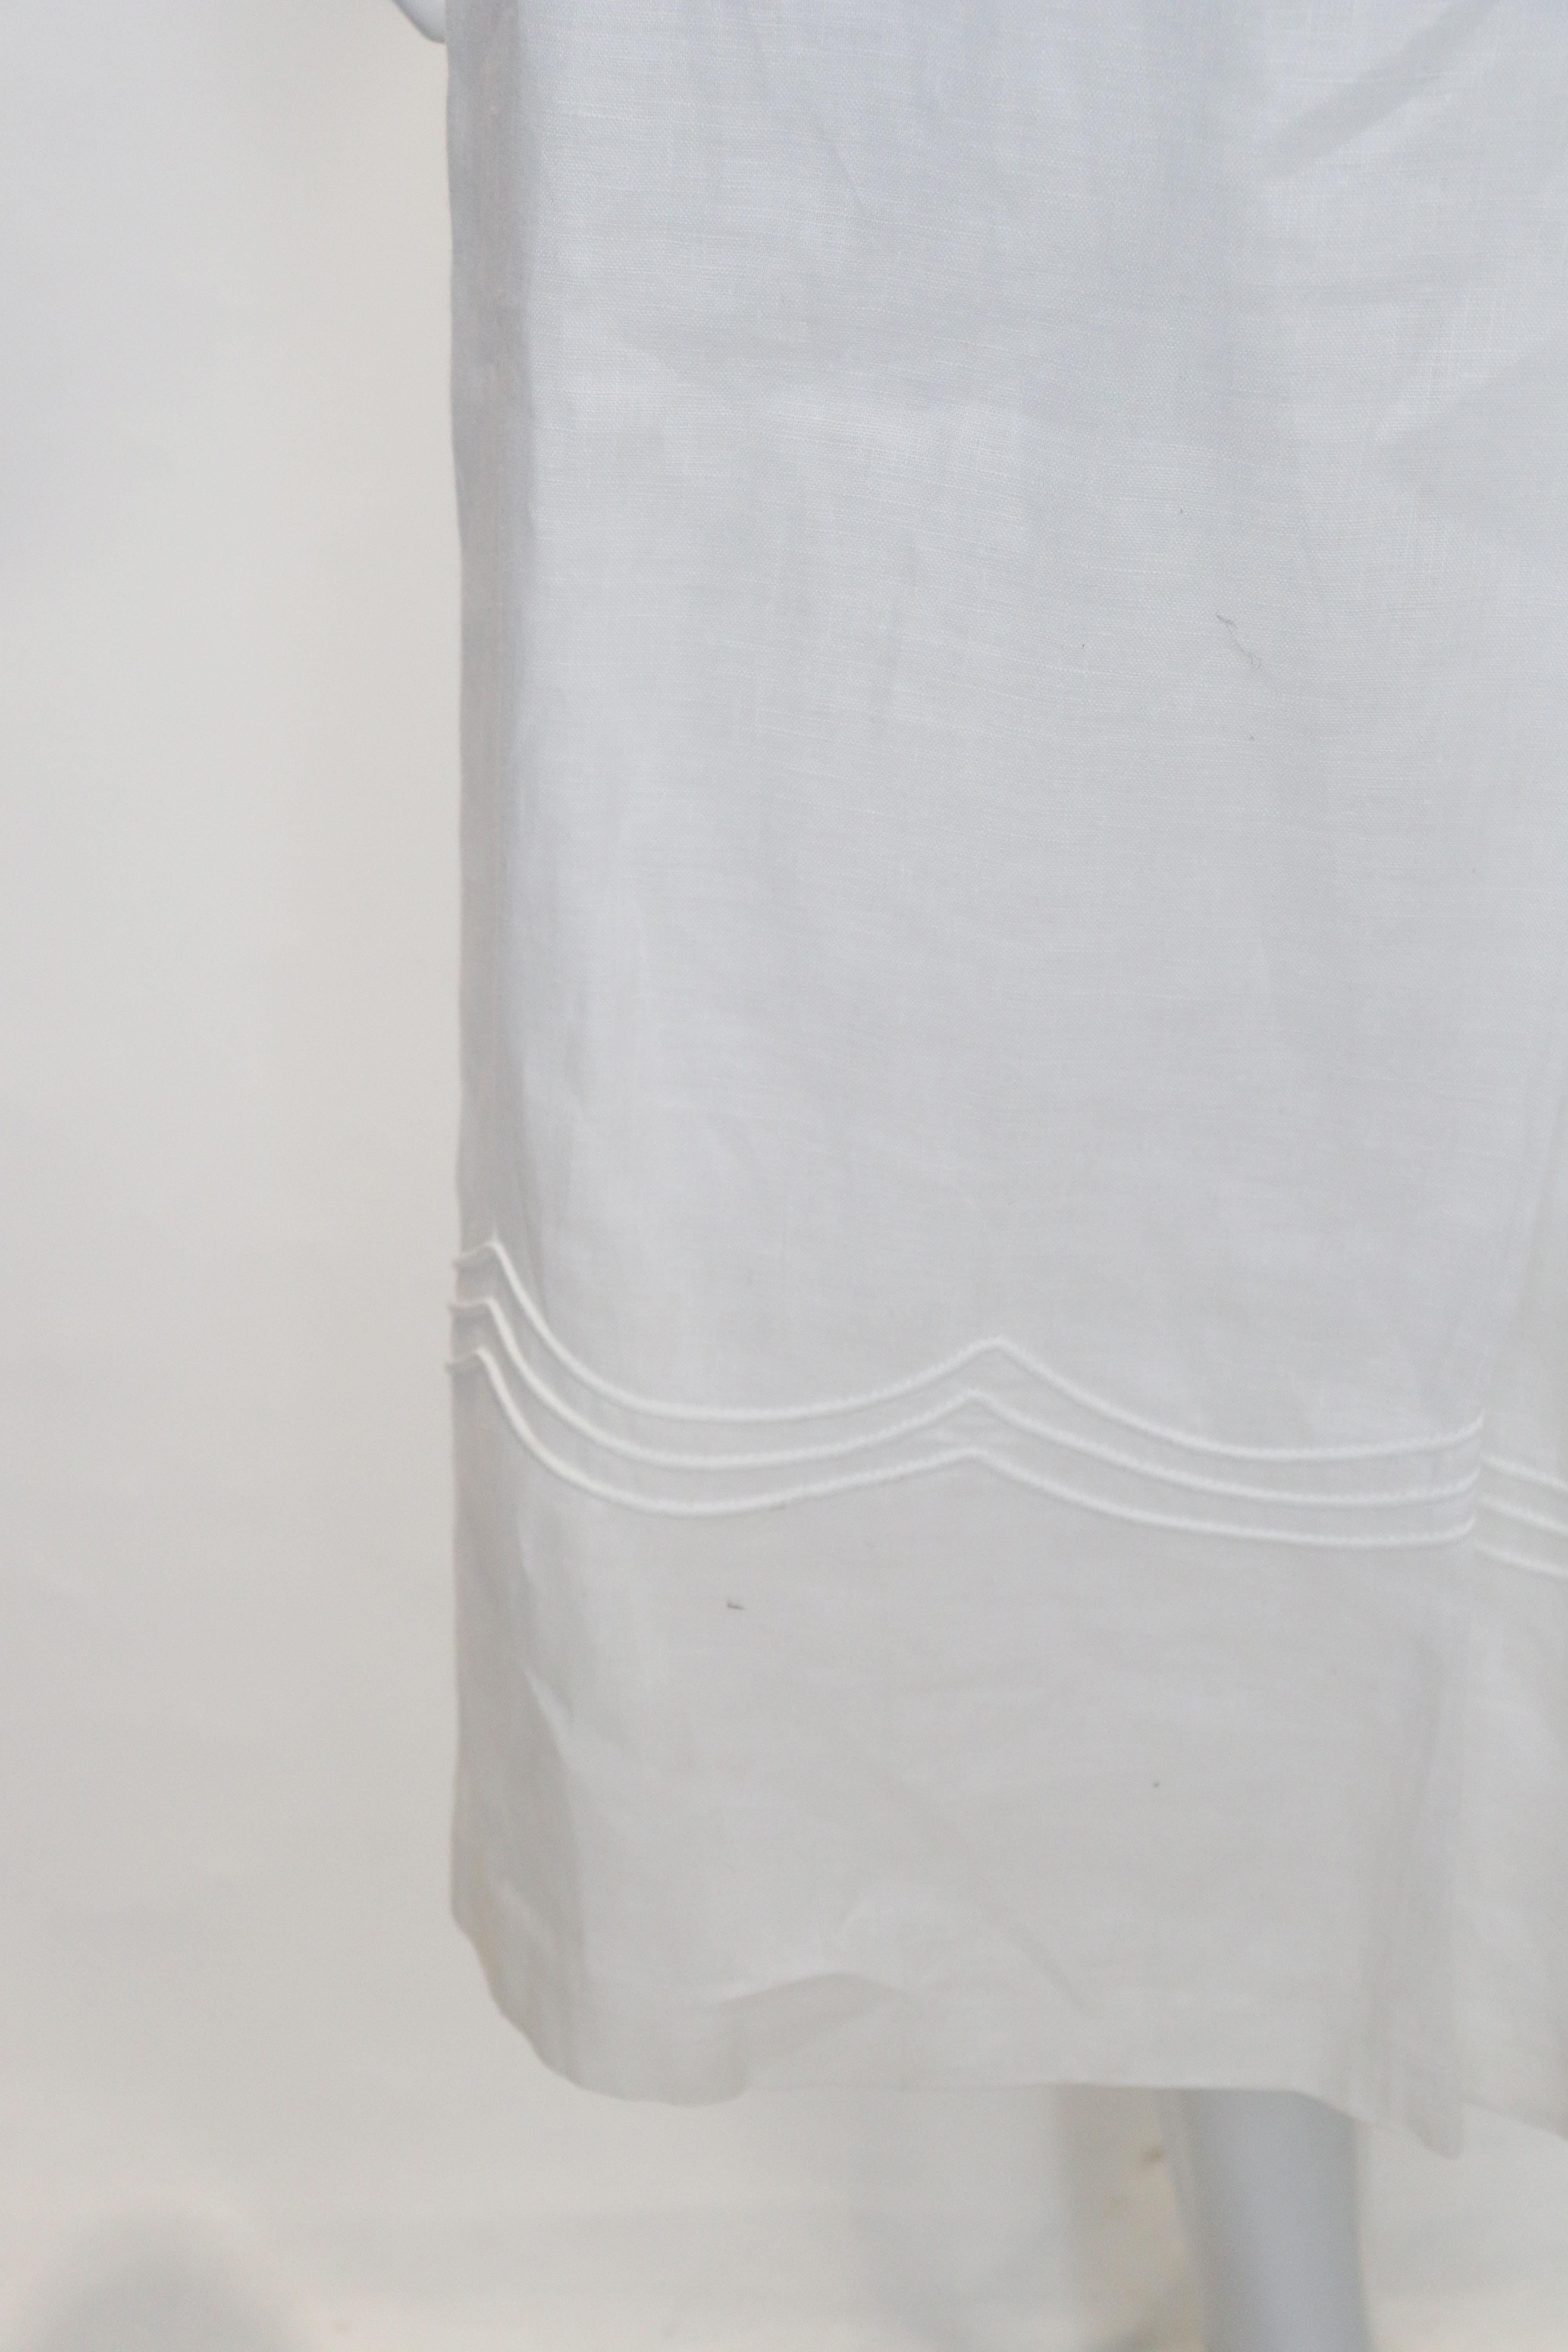 Women's Vintge White Linen Skirt by Della Porta For Sale